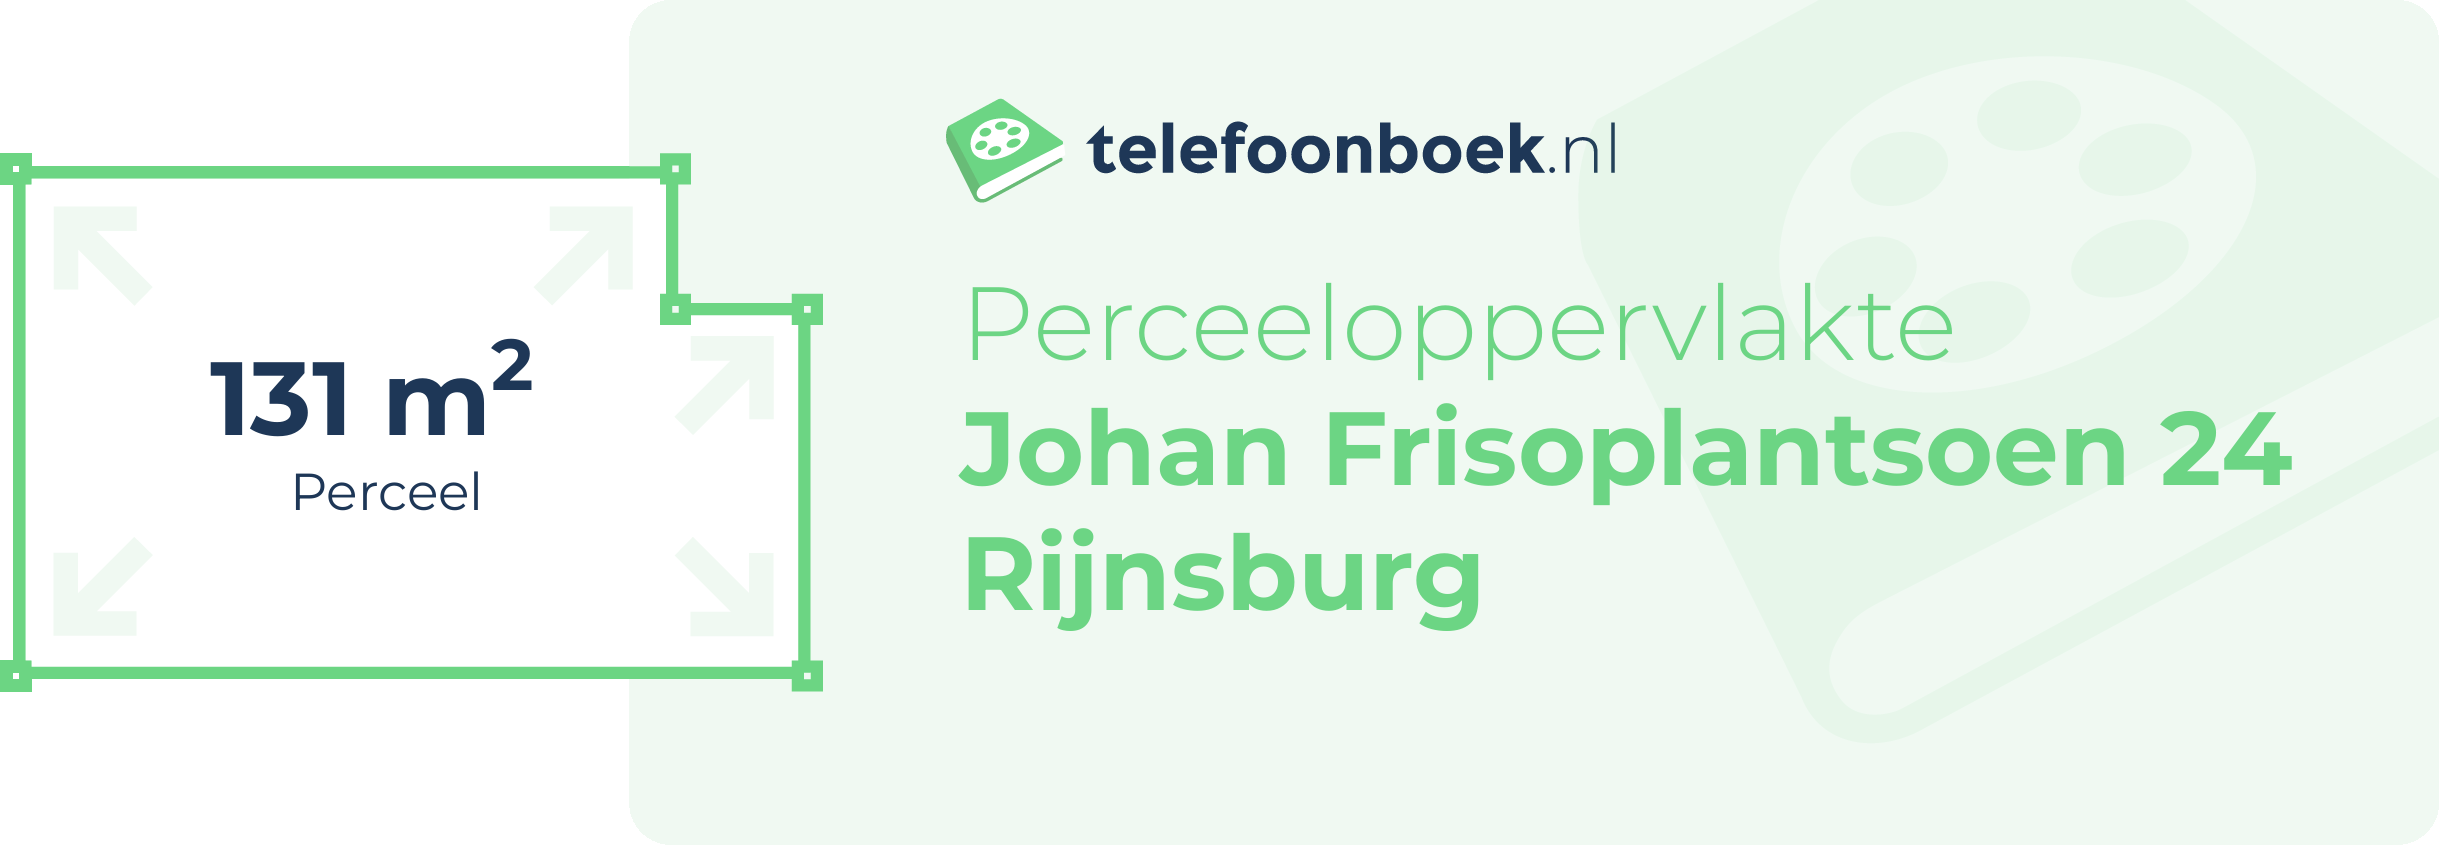 Perceeloppervlakte Johan Frisoplantsoen 24 Rijnsburg